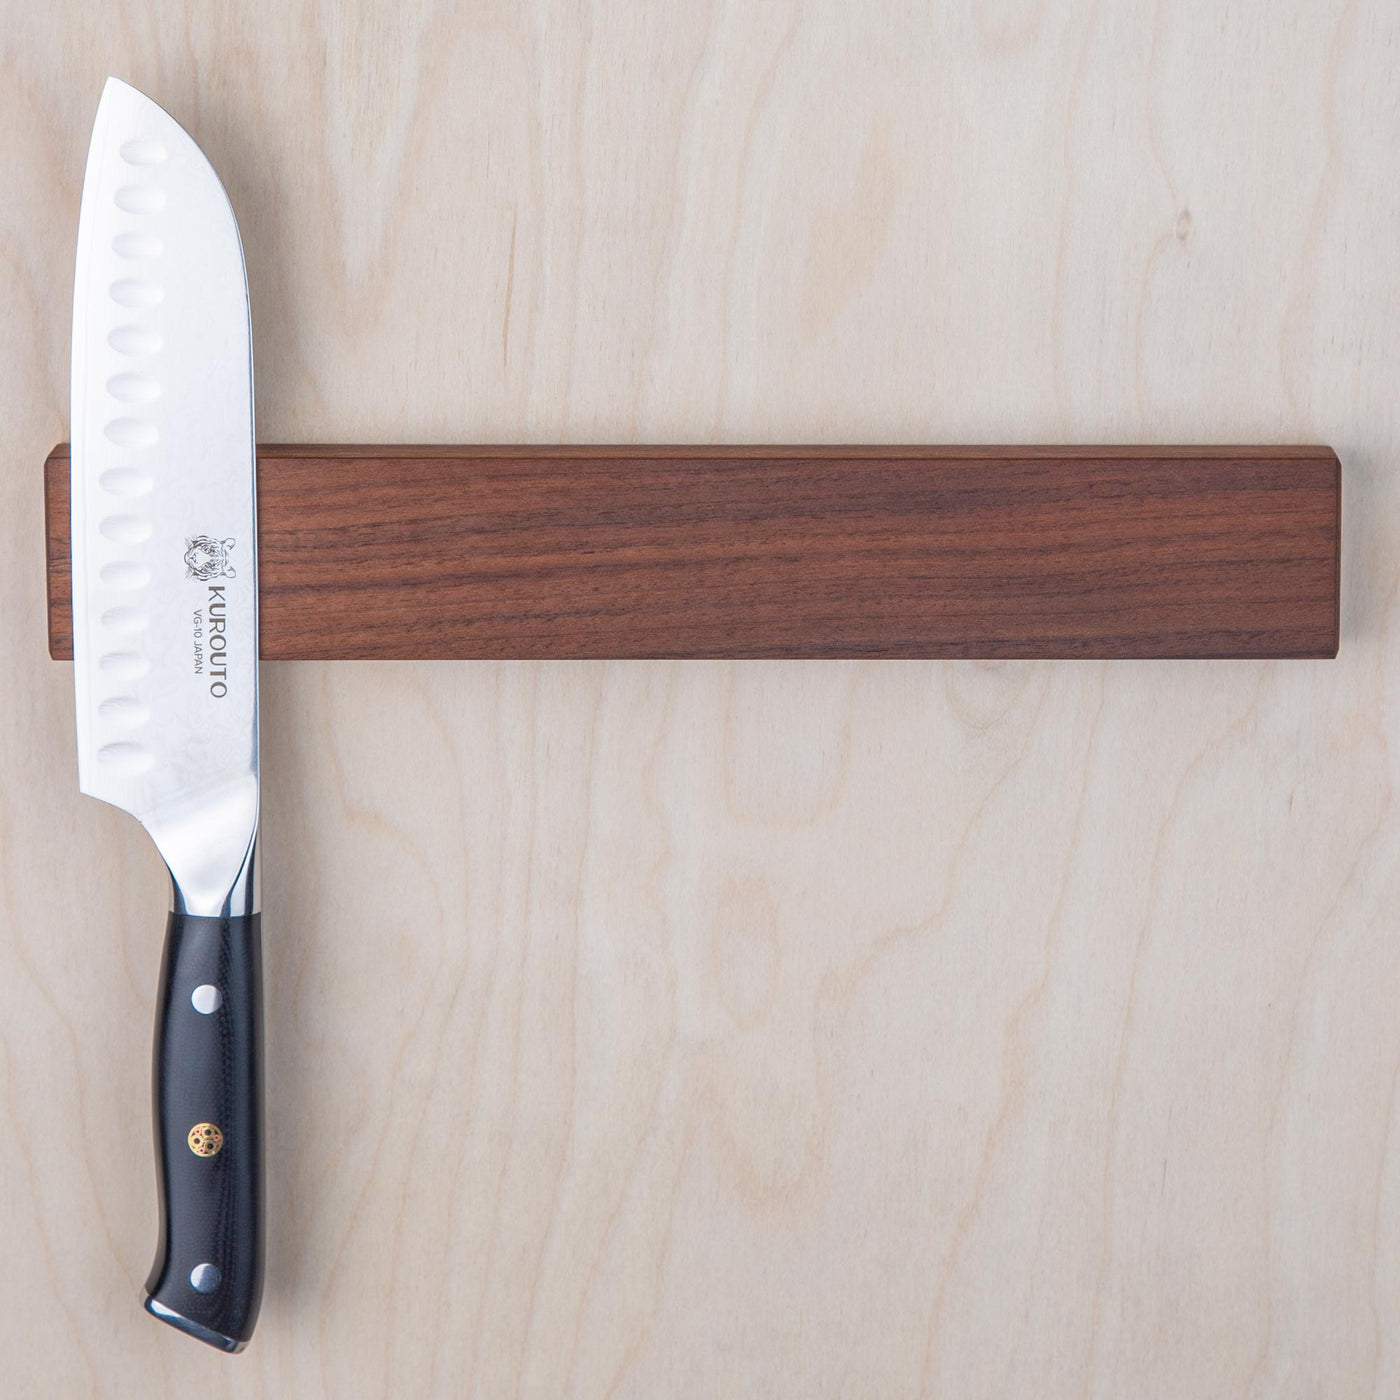 Wüsthof magnetic knife block beech wood black 25 cm - WU7277